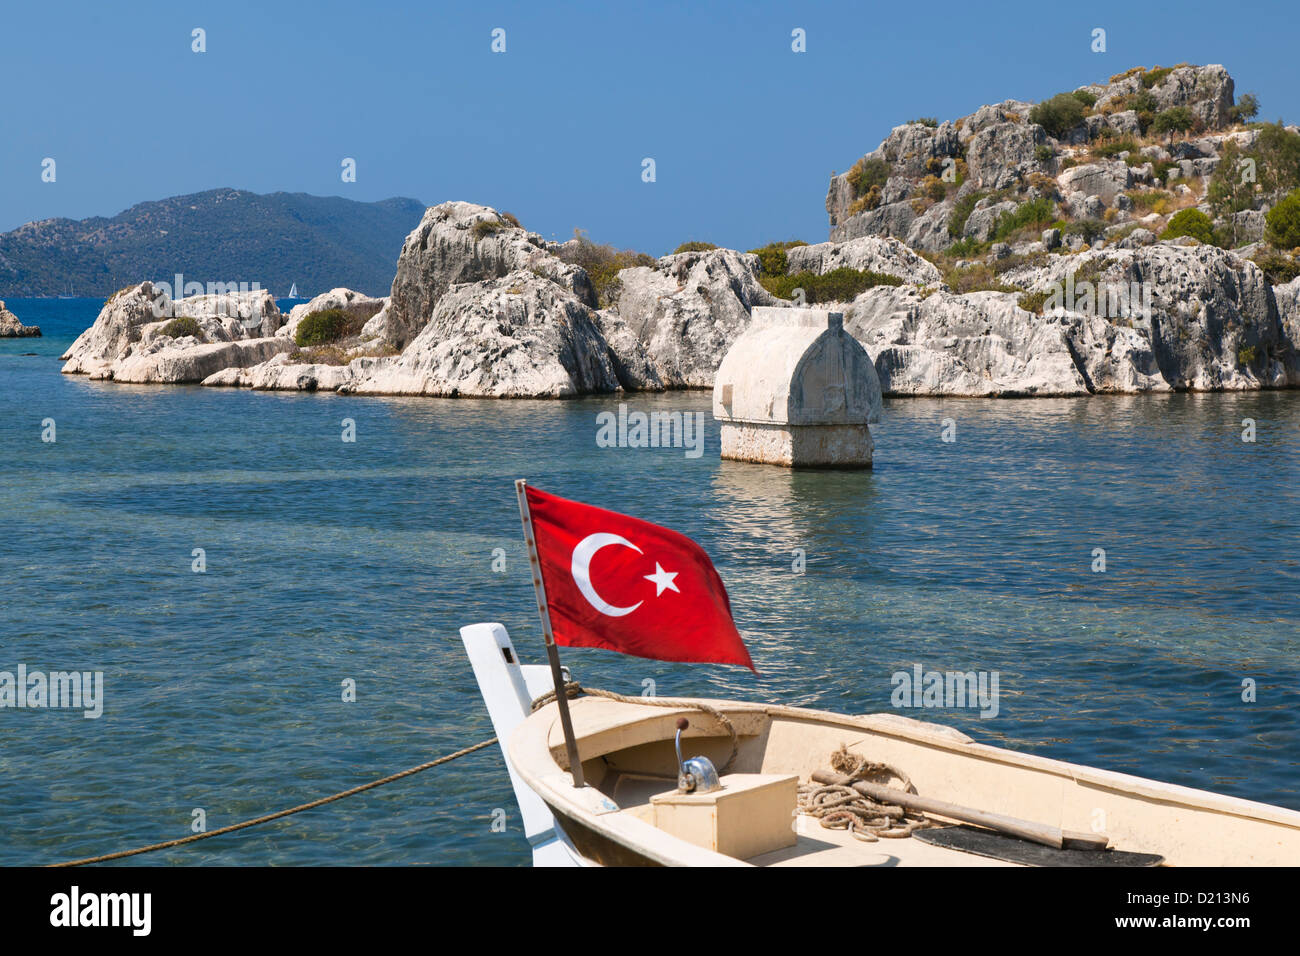 Boat with turkish flag, sarcophagus, Simena, Kalekoy, lycian coast, Mediterranean Sea, Turkey Stock Photo